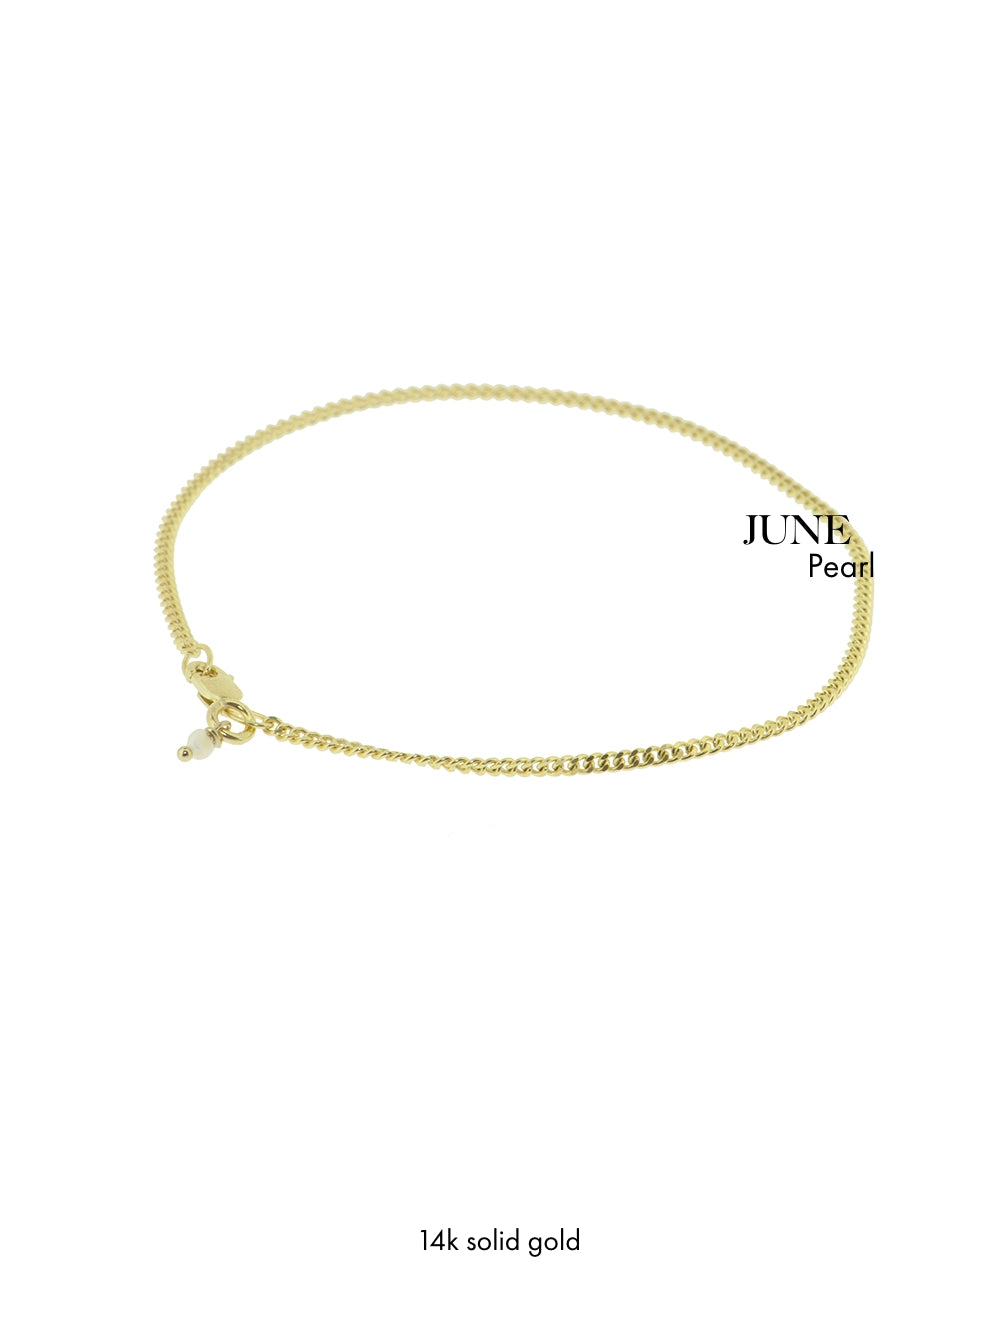 Birthstone June - Pearl | 14K Solid Gold